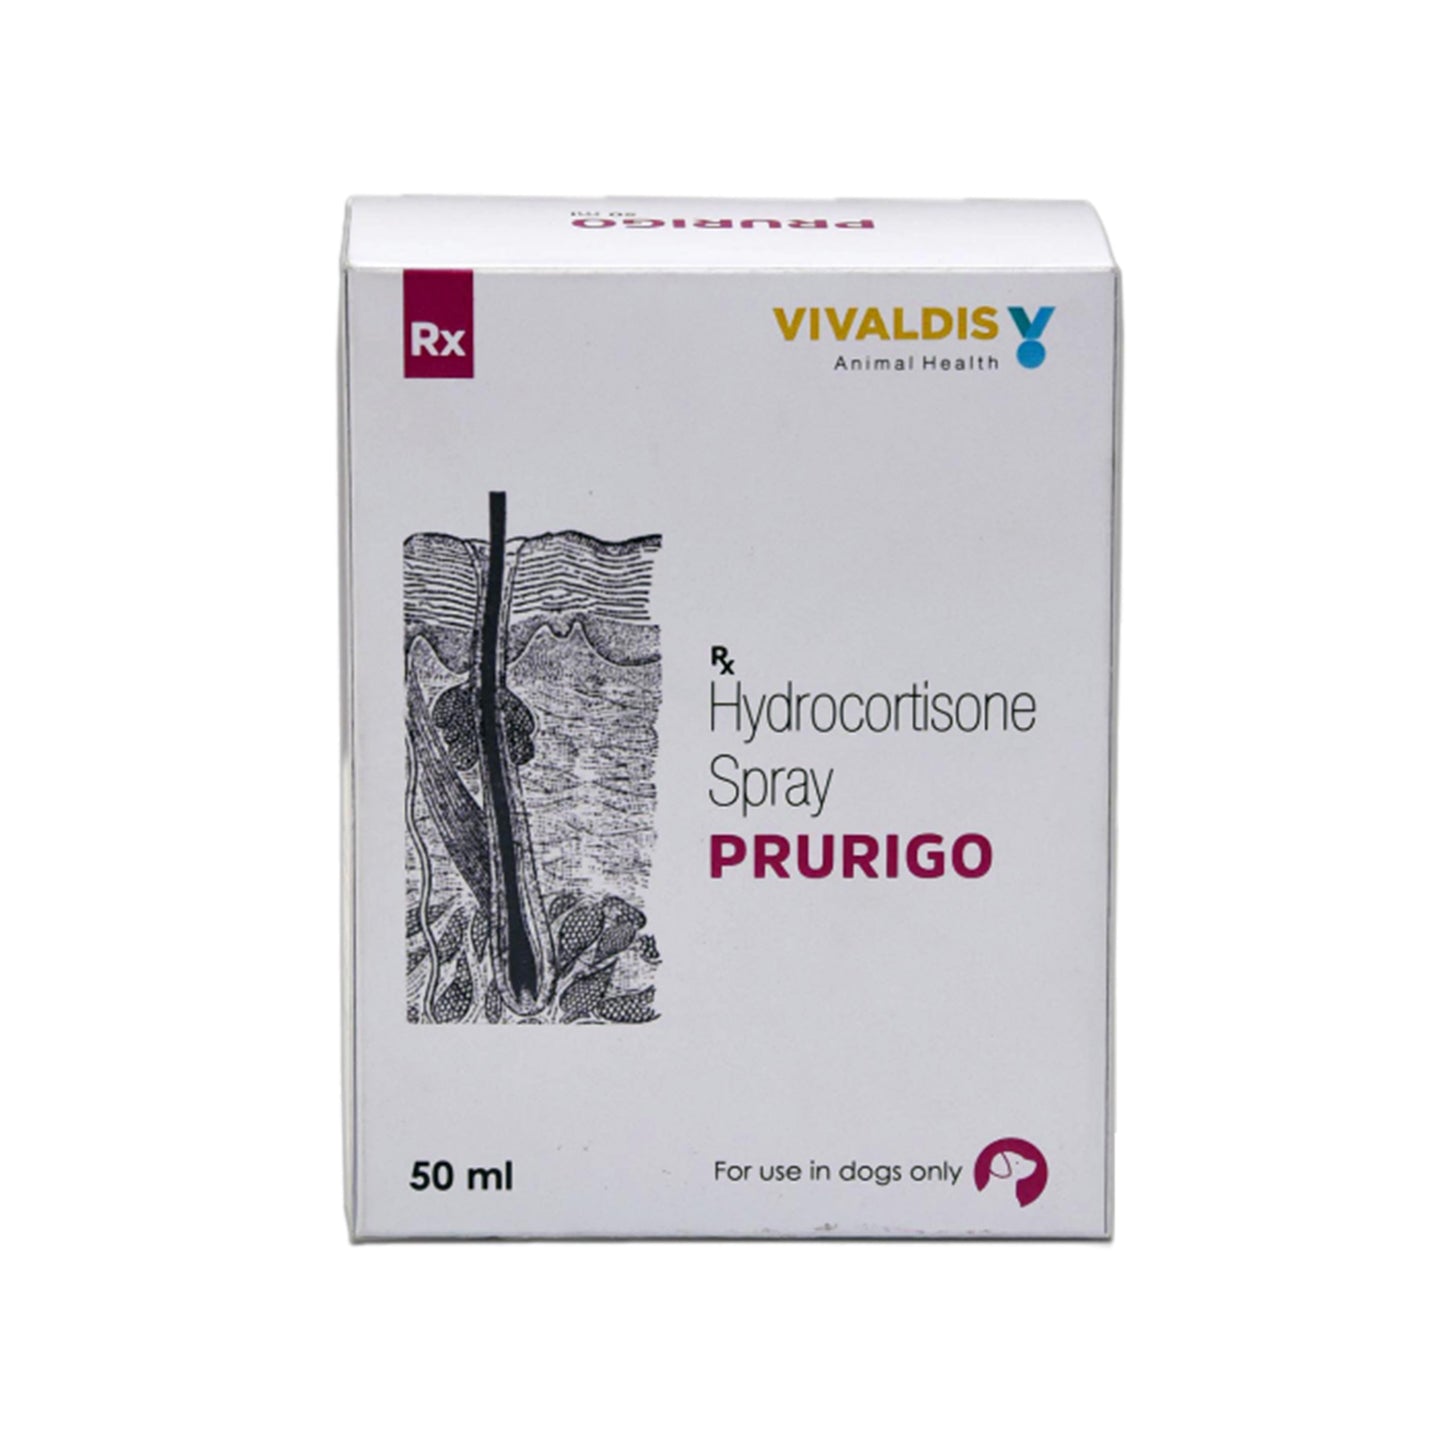 Vivaldis -  Prurigo Spray